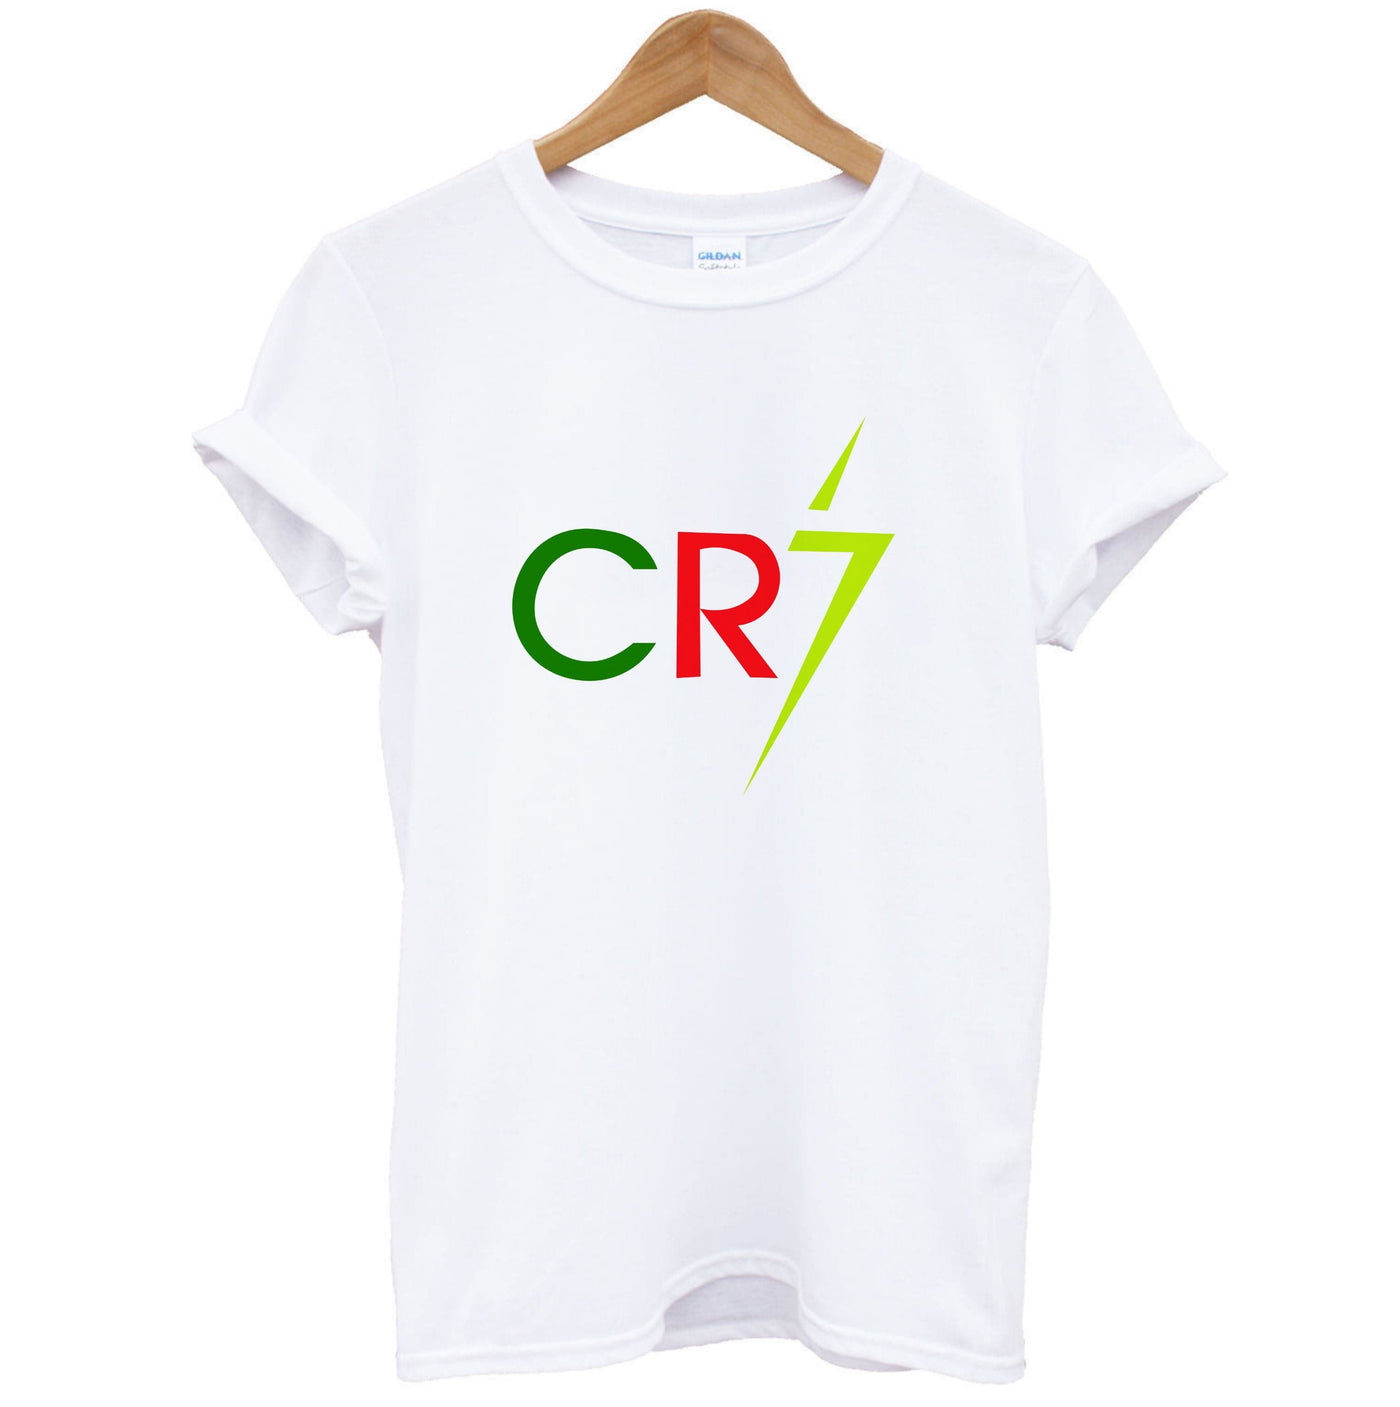 CR7 - Football T-Shirt